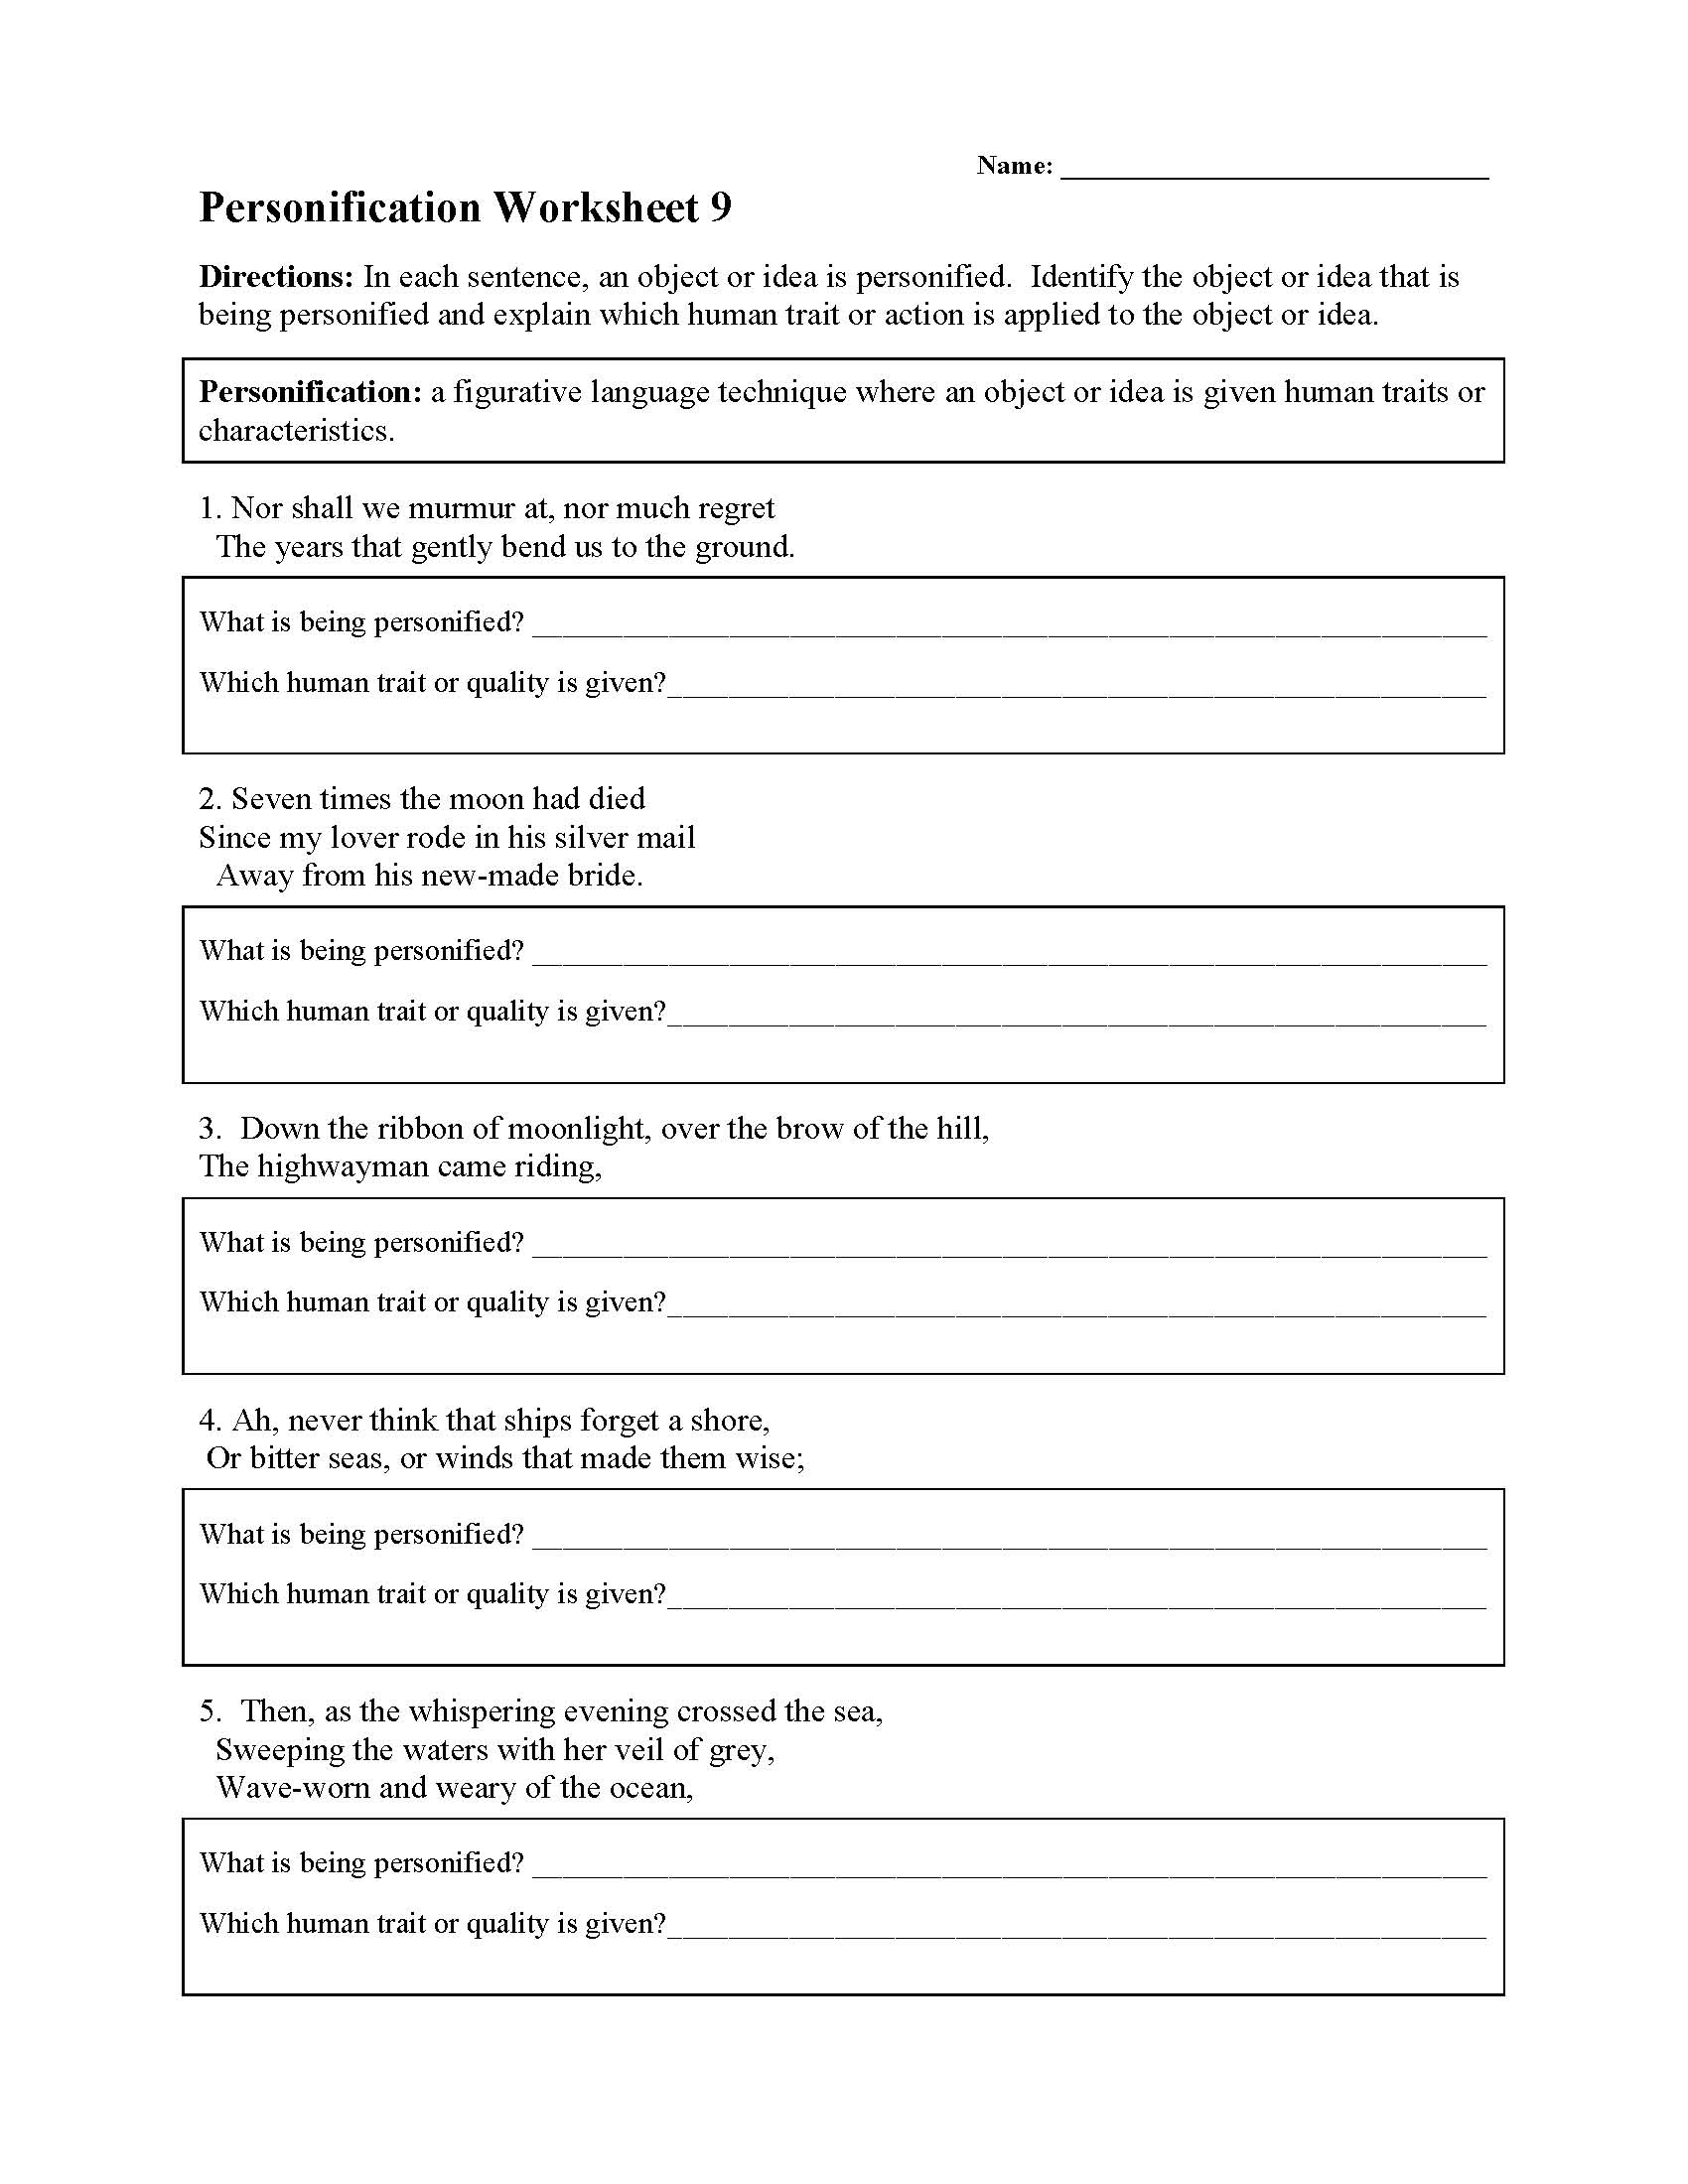 characterization-worksheet-answers